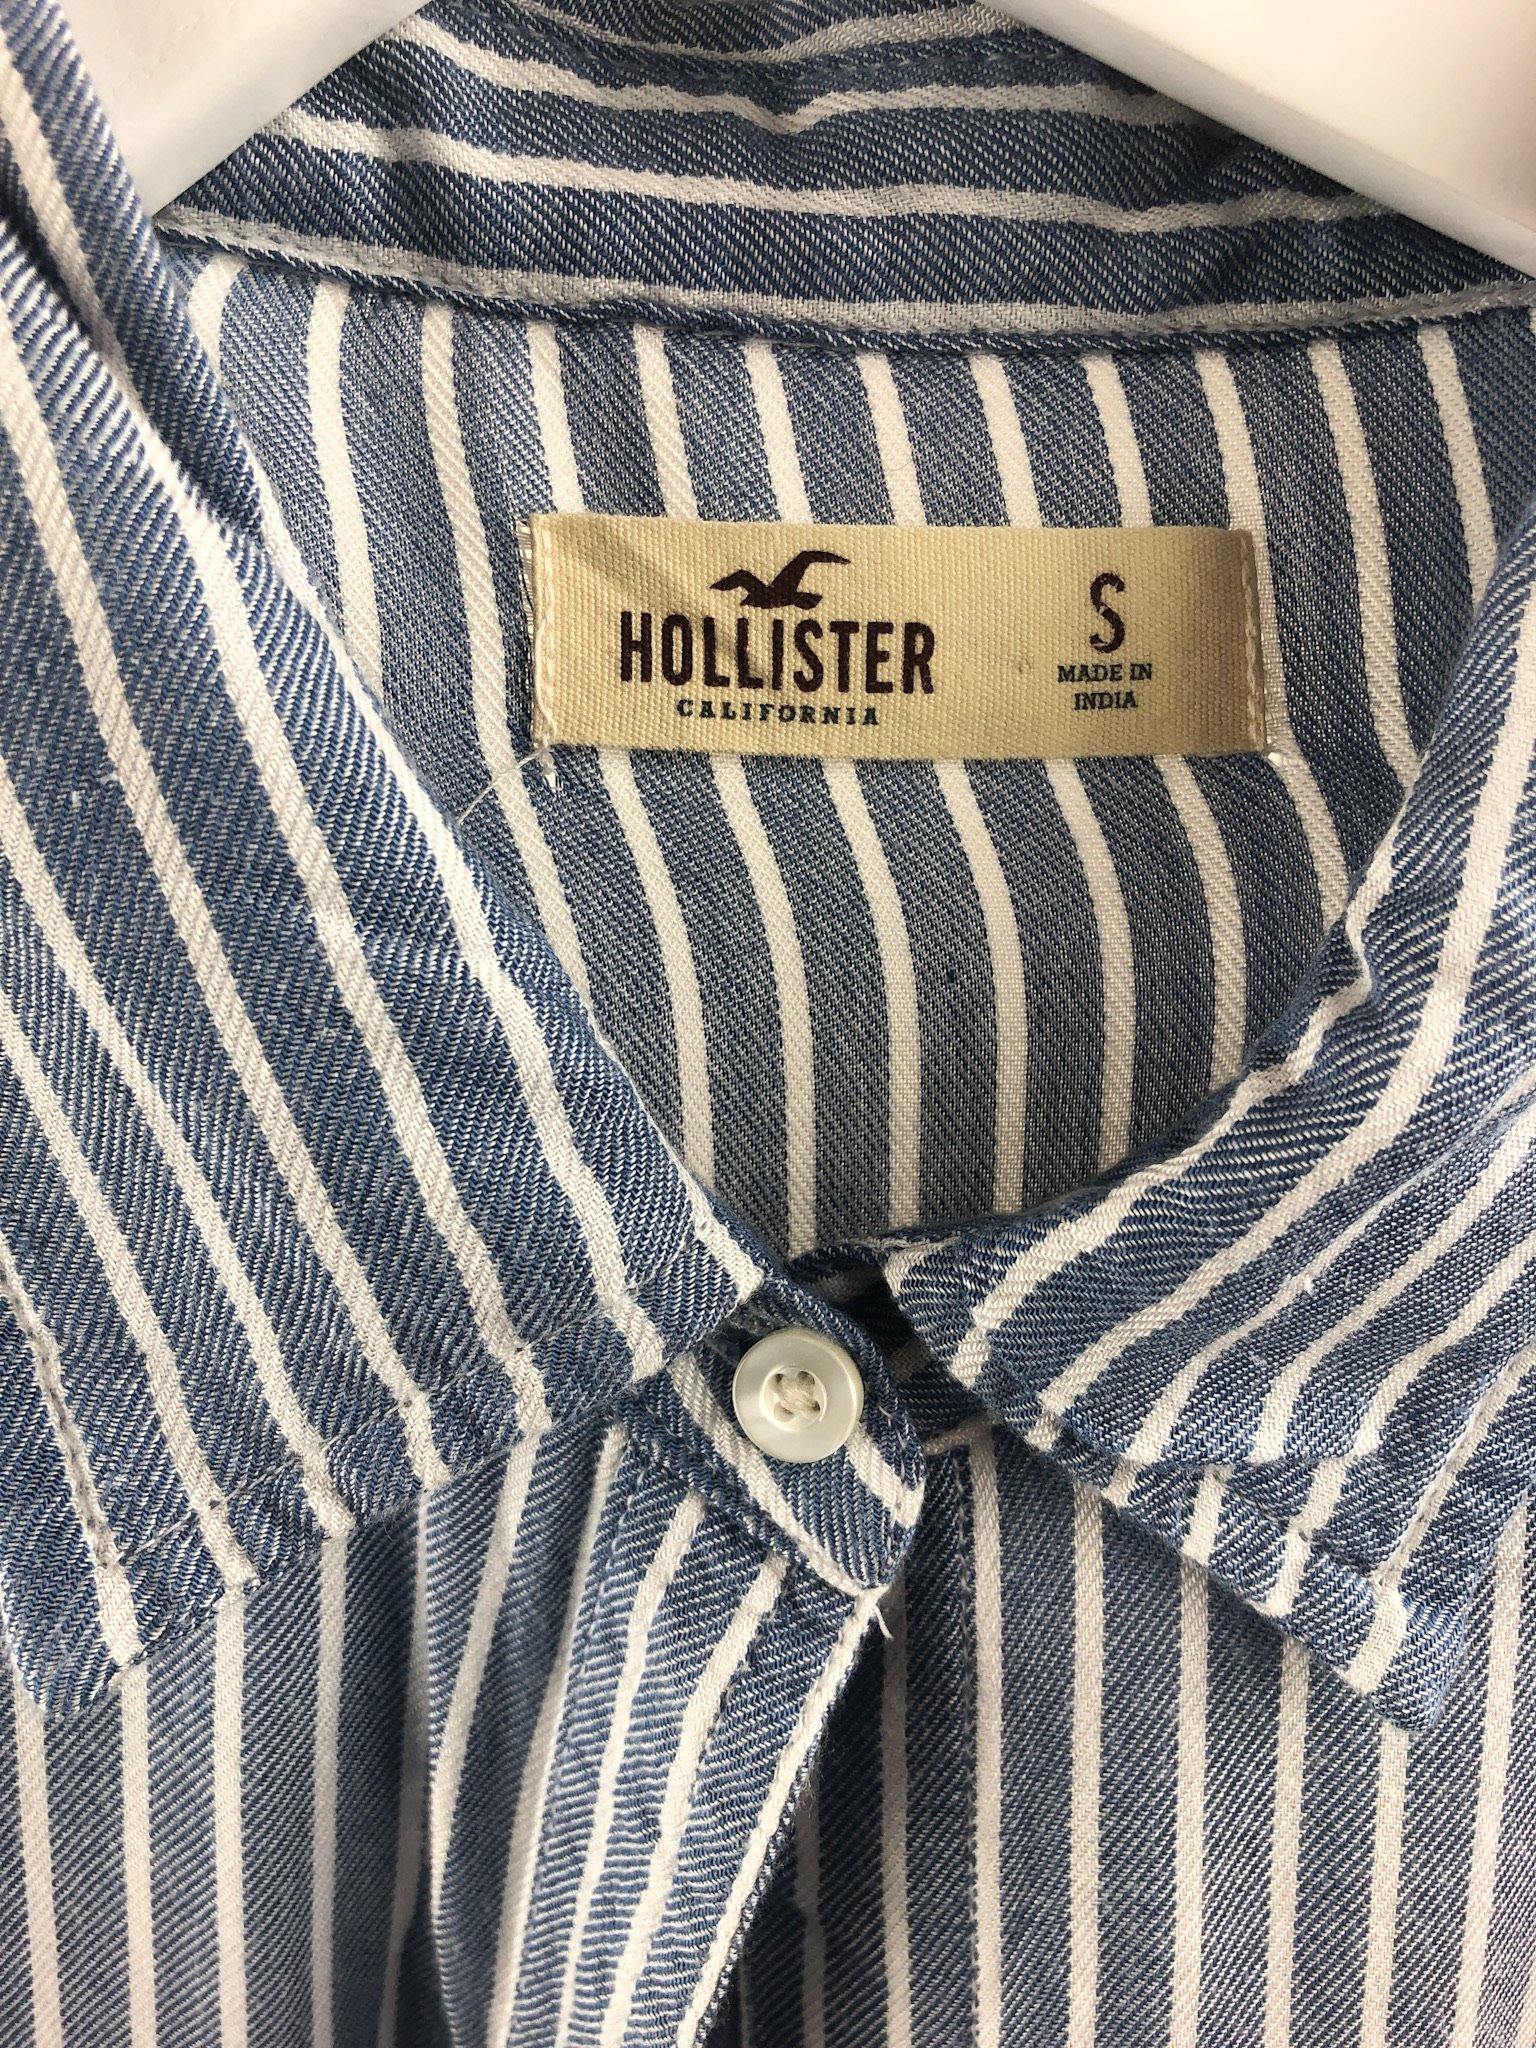 Pre-Loved Hollister, Teen Girls' Striped Shirt, Blue/White, Size S